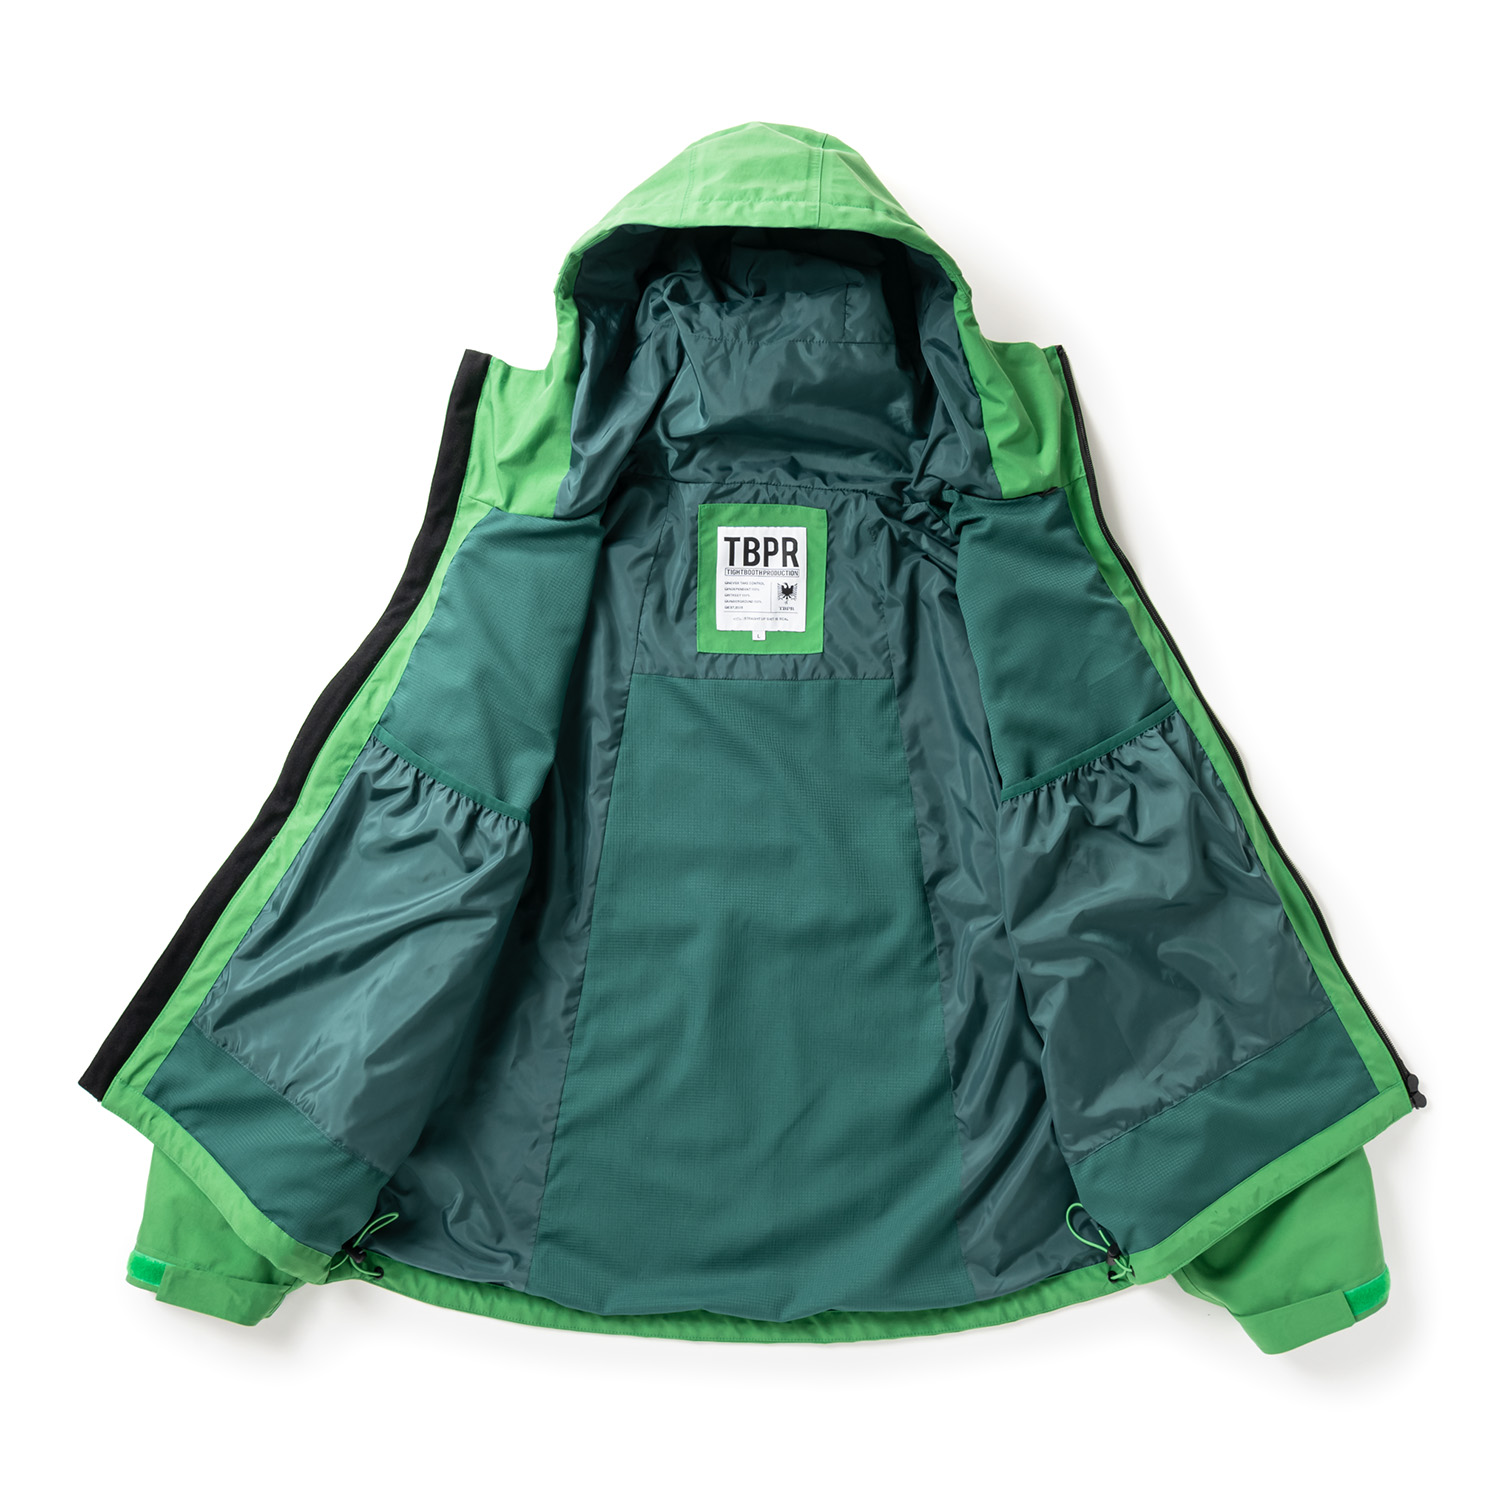 新品 tightbooth snow jacket L Green